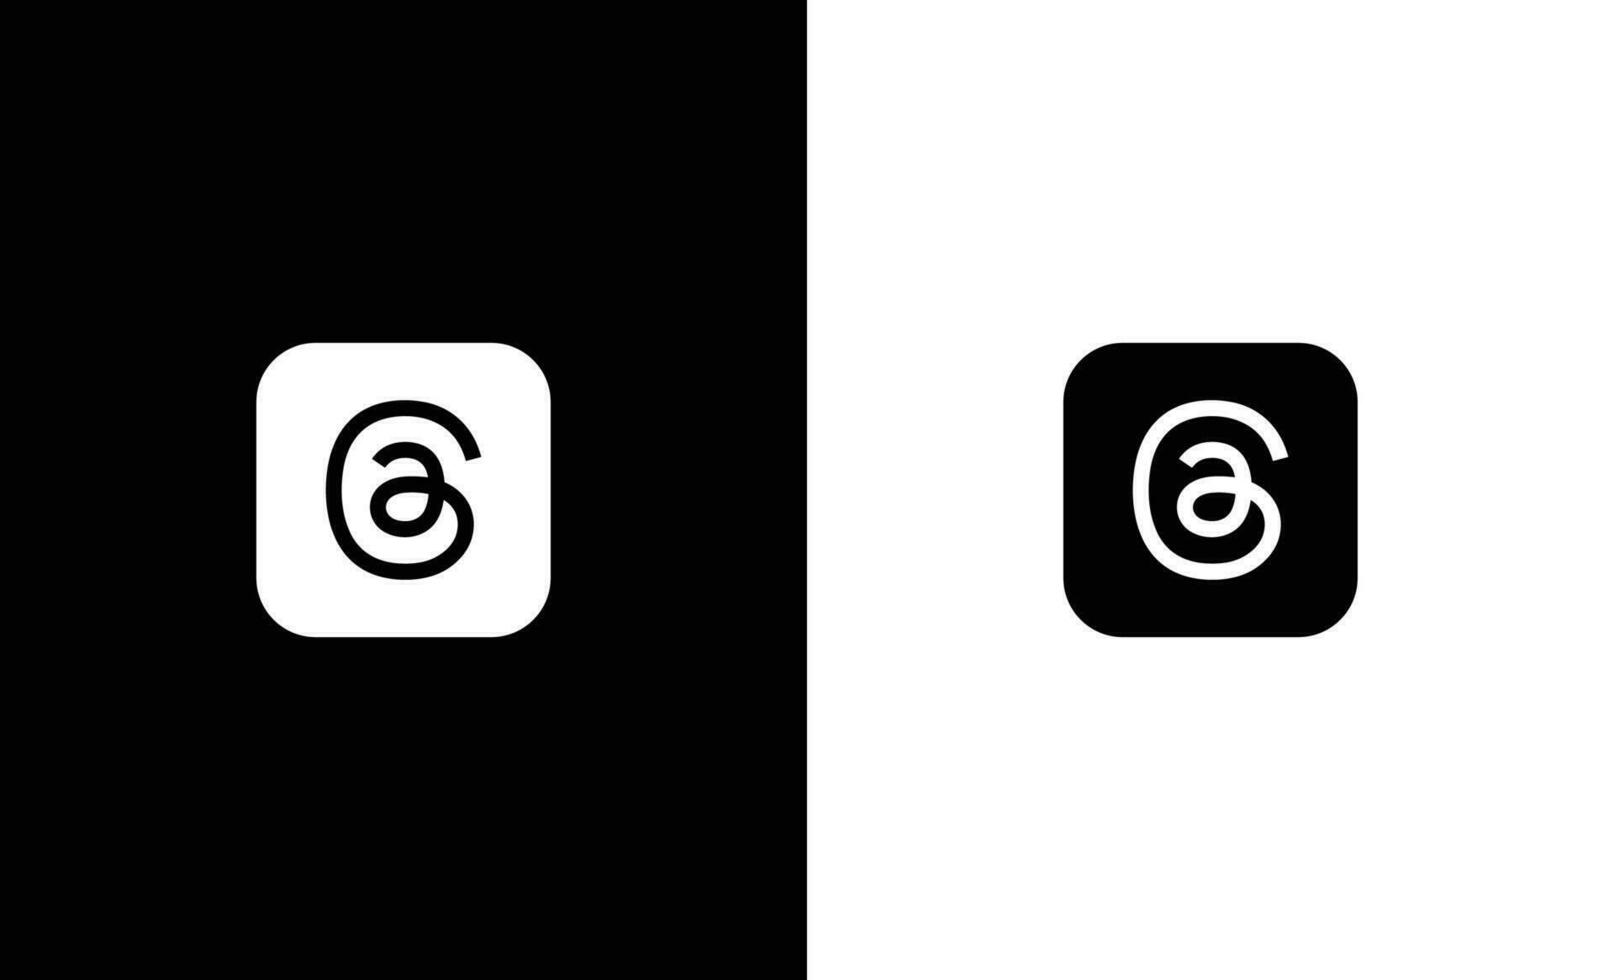 Threads social media logo icon, black and white vector